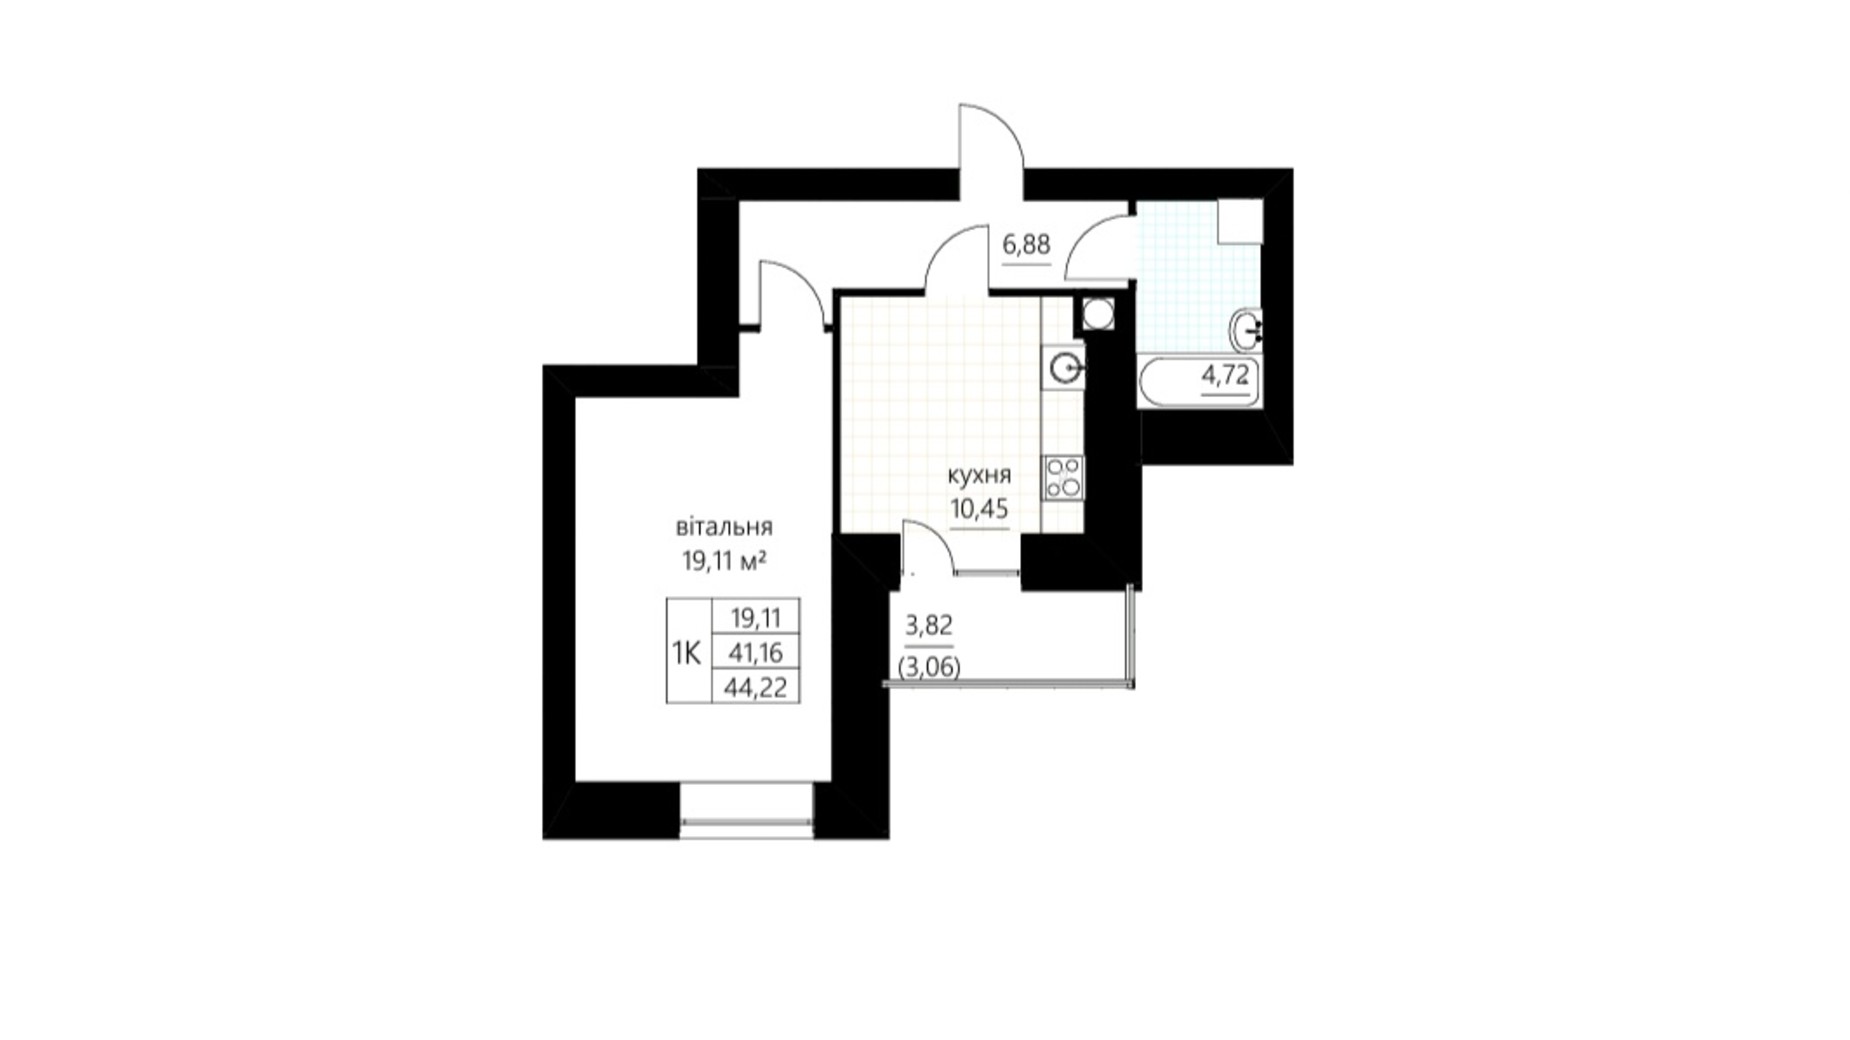 Планування 1-кімнатної квартири в ЖК Слівен-21 44.22 м², фото 674839